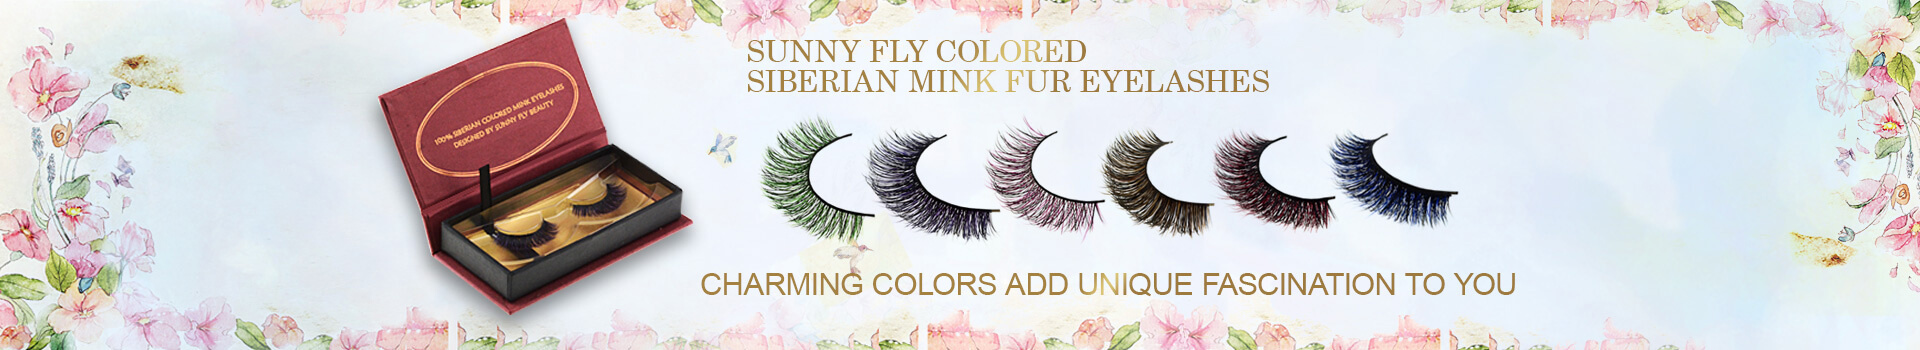 Farget Siberian Mink Fur Eyelashes MC37